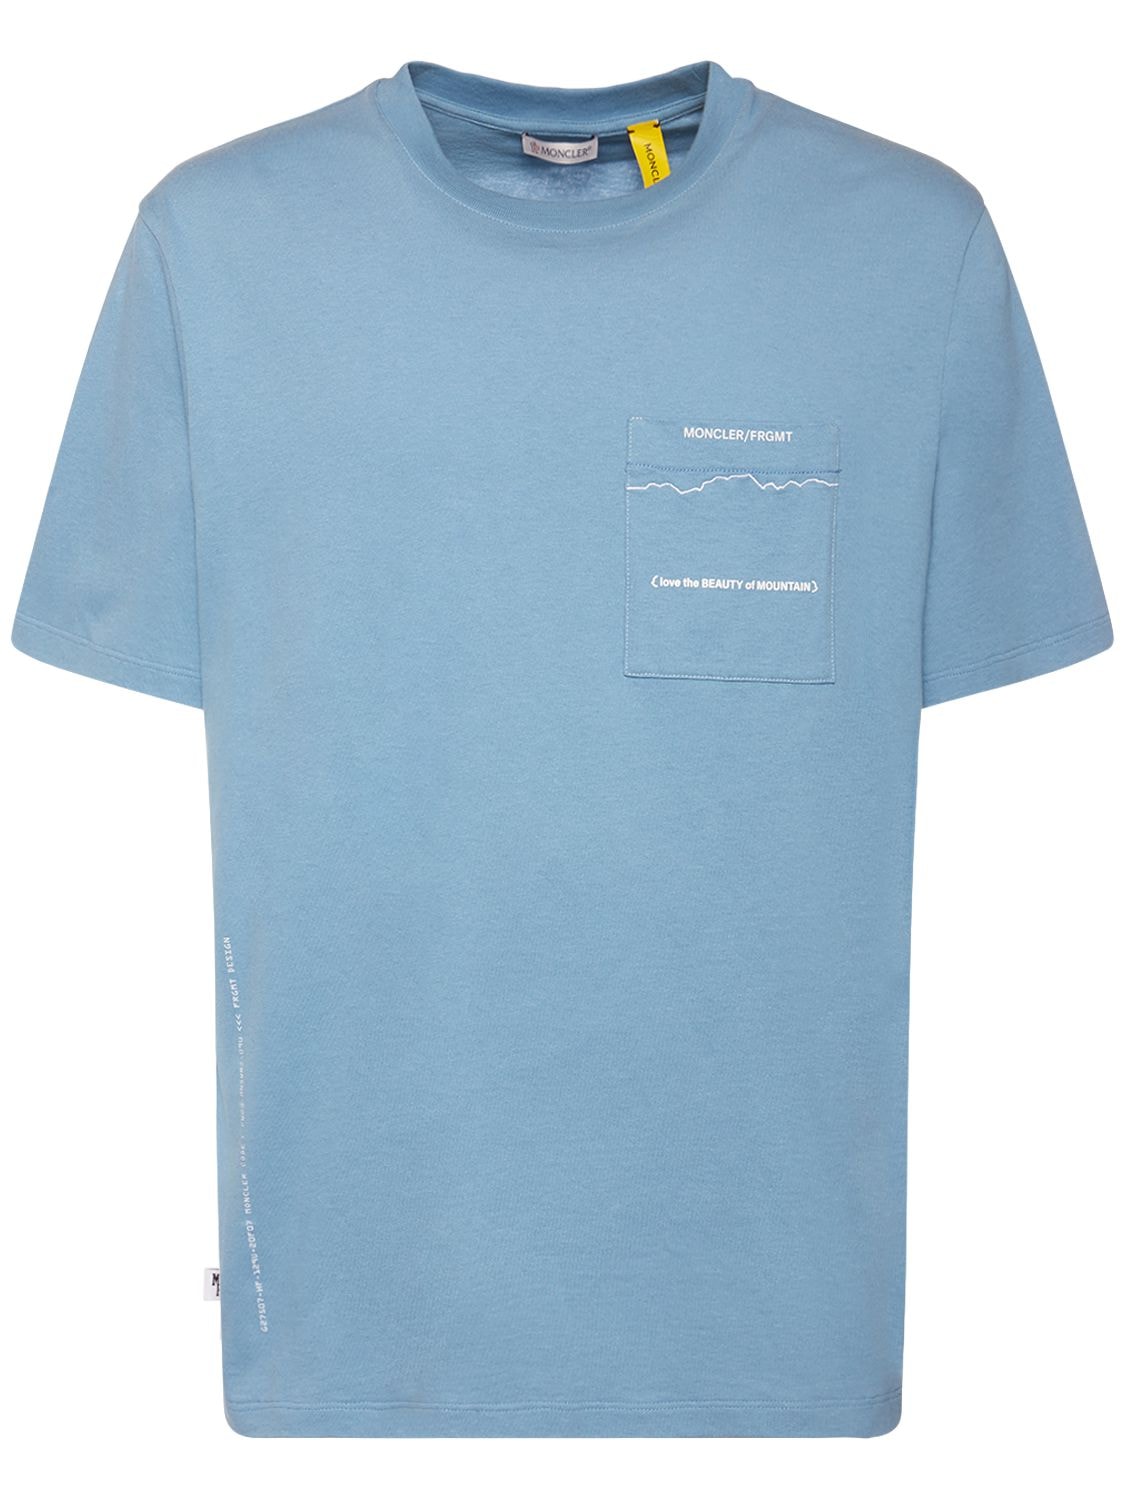 Shop Moncler Genius Moncler X Frgmt Mountain Jersey T-shirt In Light Blue